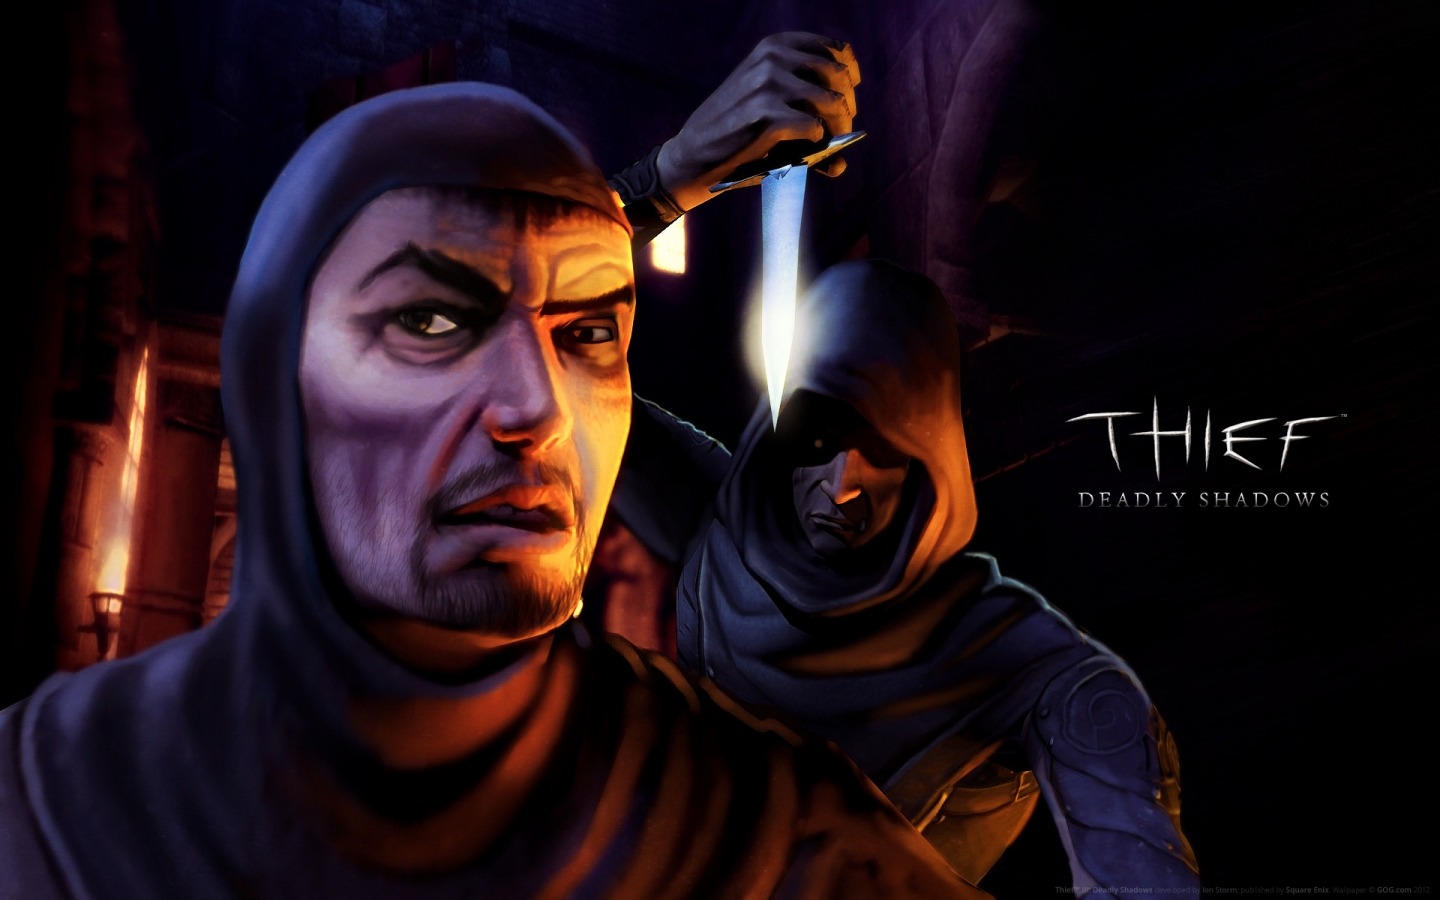 Thief Deadly Shadows for 1440 x 900 widescreen resolution